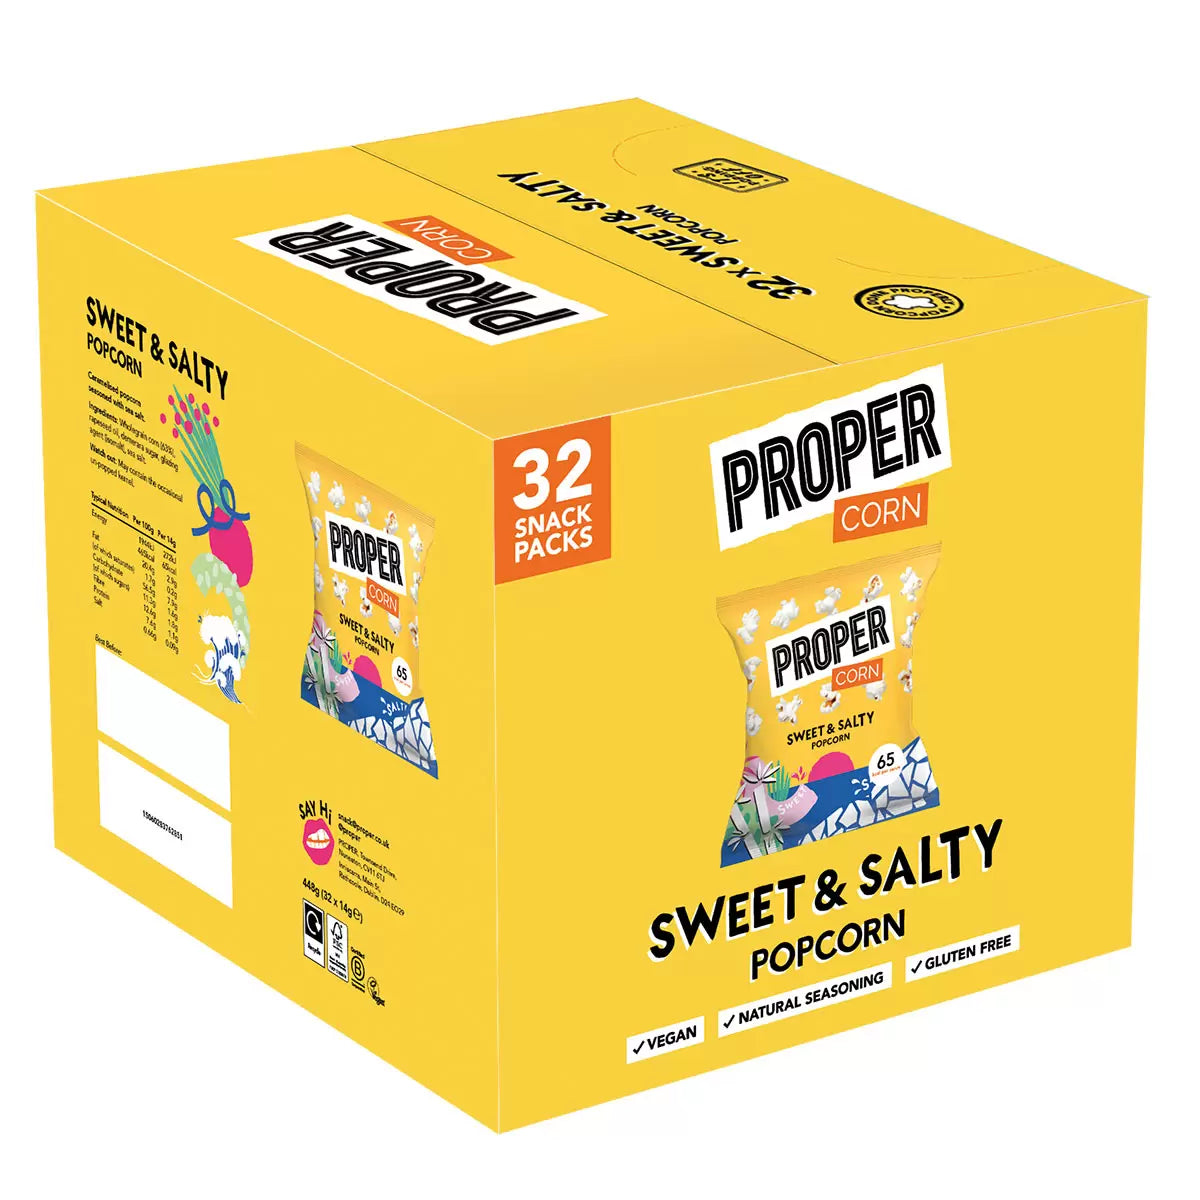 Proper Corn Popcorn Sweet & Salty Mixed Case - 14g (Pack of 32)